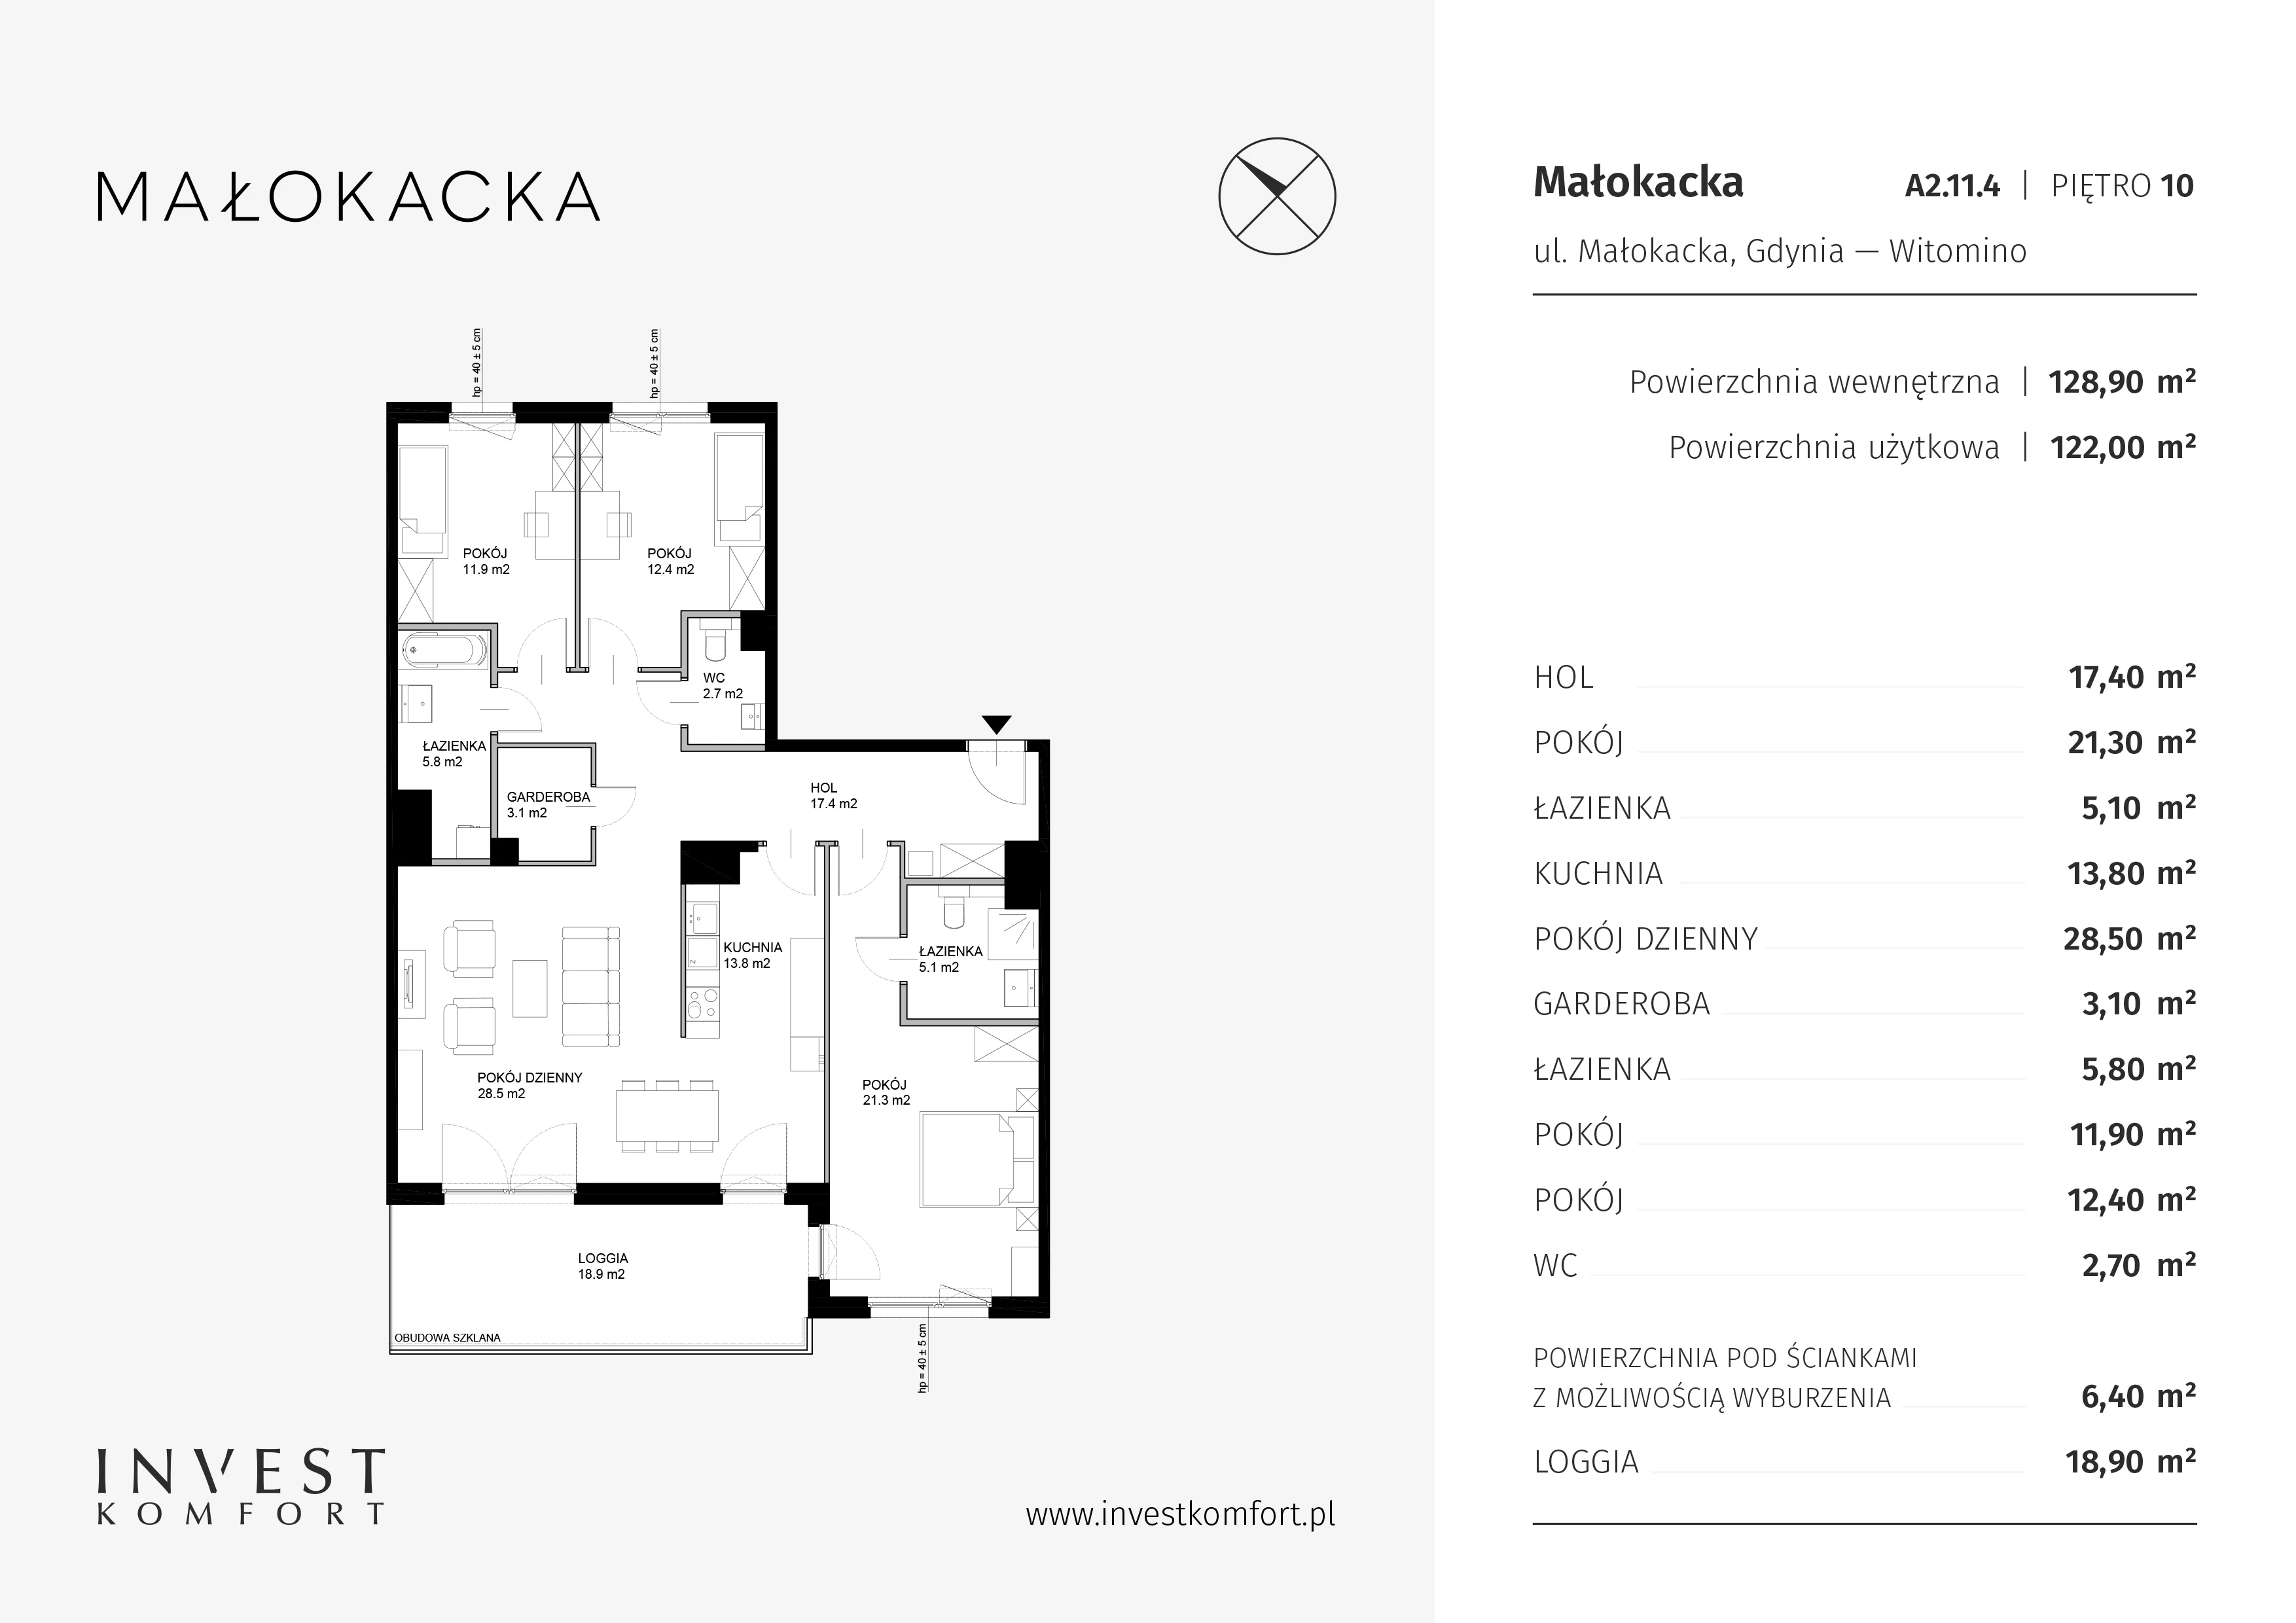 Apartament 127,60 m², piętro 10, oferta nr A2.11.4, Małokacka, Gdynia, Witomino, ul. Małokacka